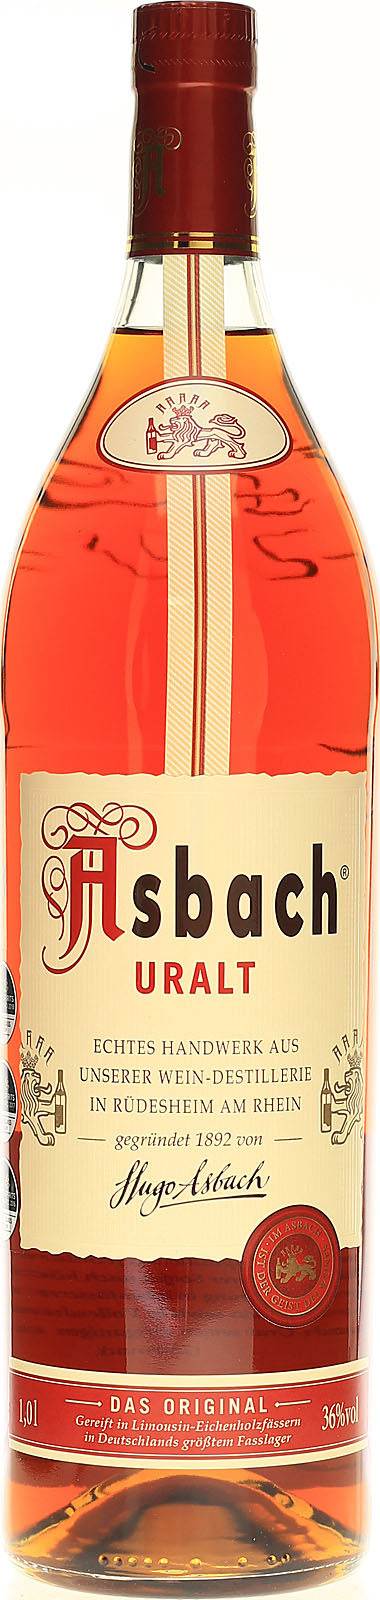 Weinbrand deutscher Asbach Uralt,